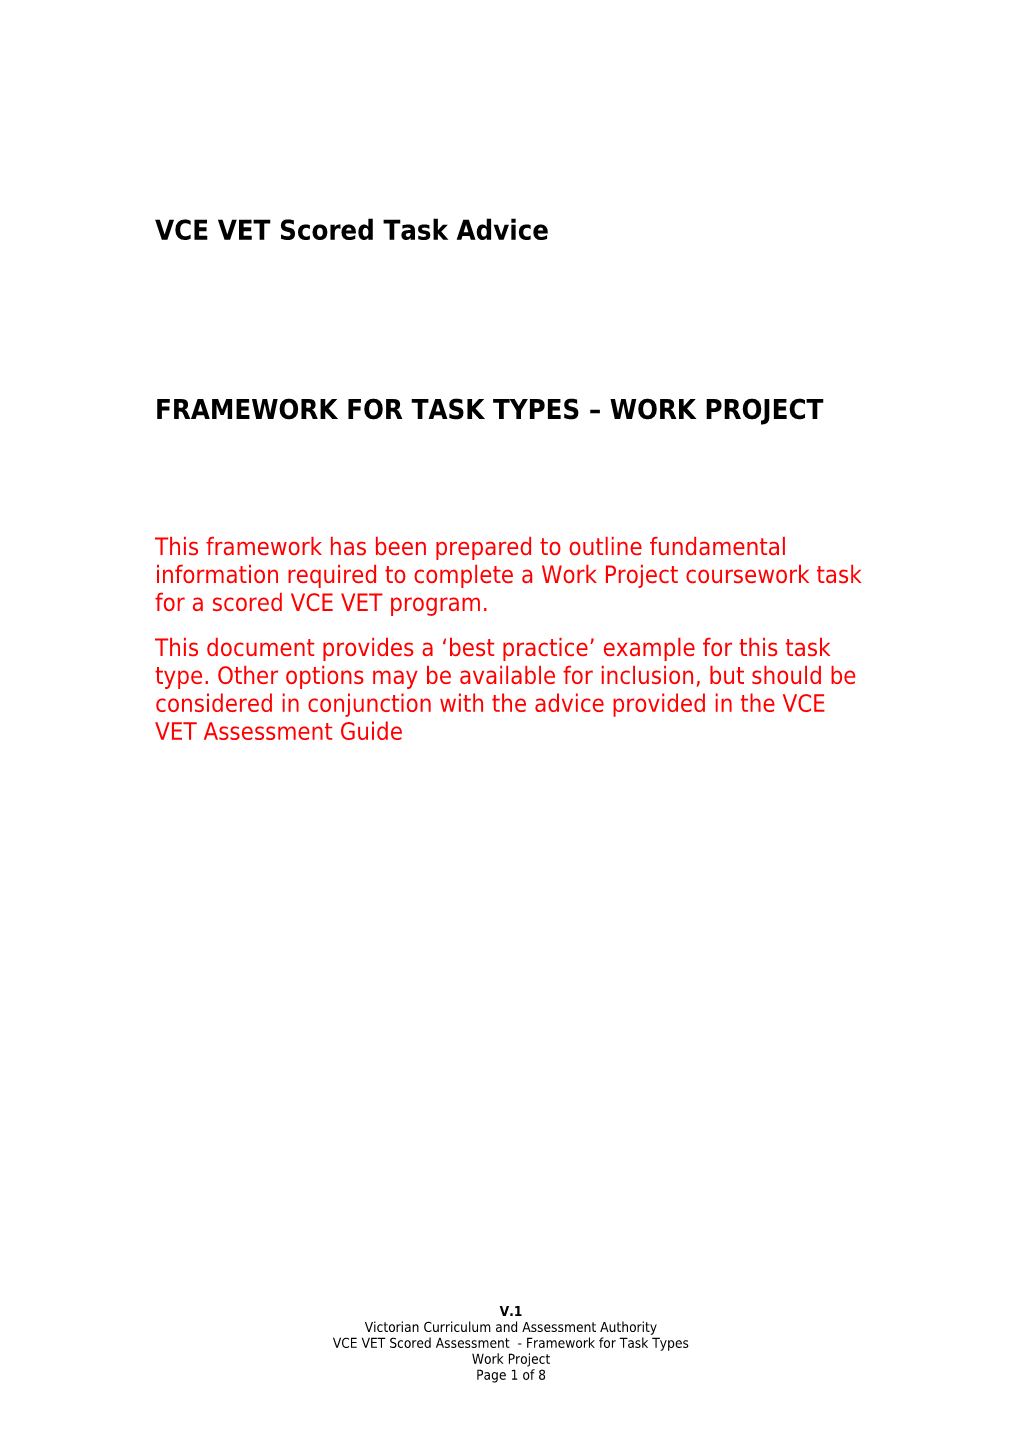 Framework for Task Types Work Project